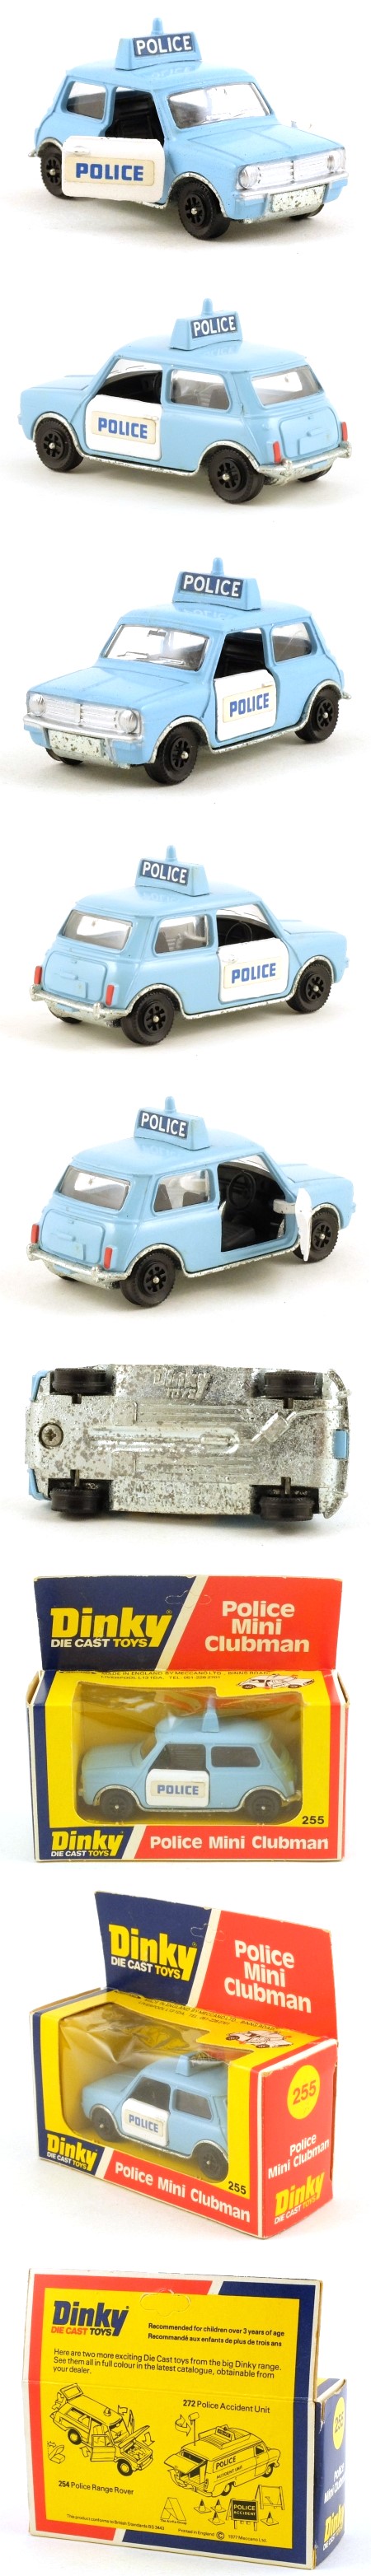 255 Police Mini Clubman